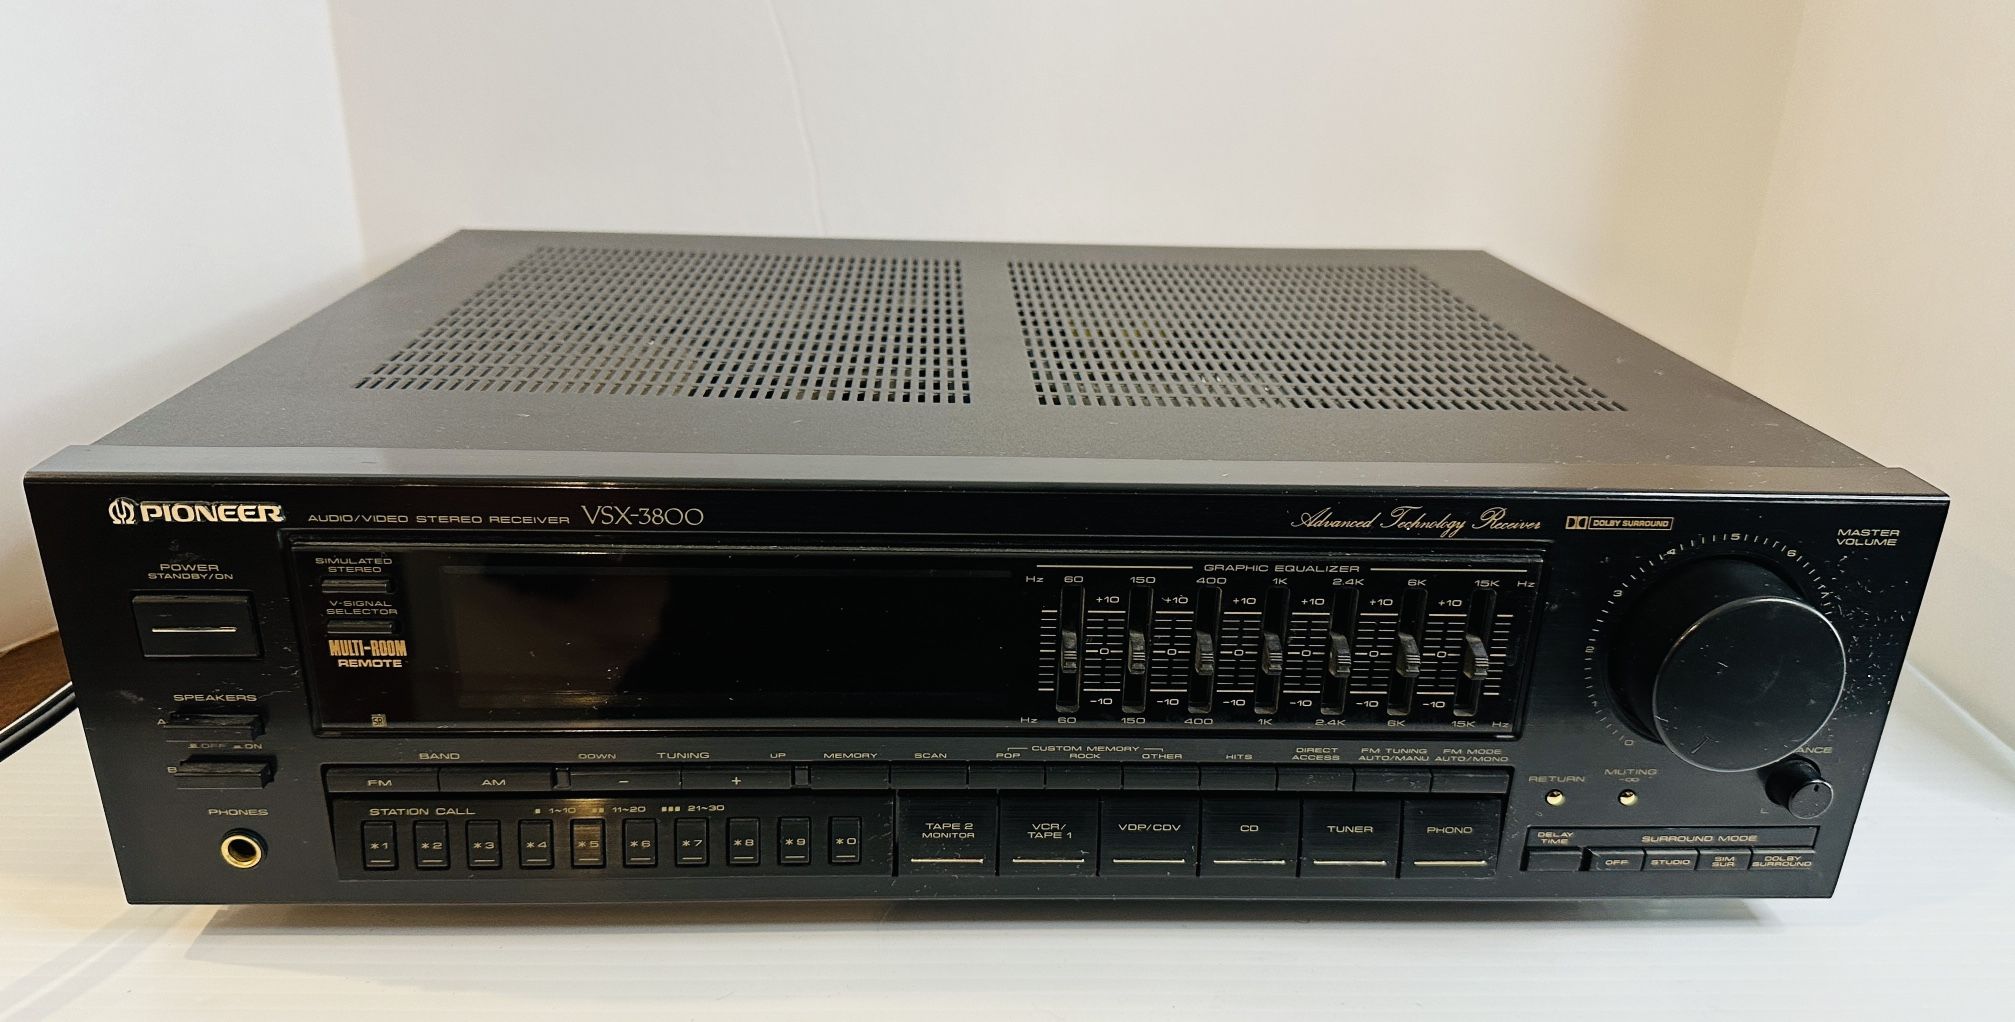 vintage pioneer receiver VSX-3800 Home Audio Video AMFM Surround Stereo Receive